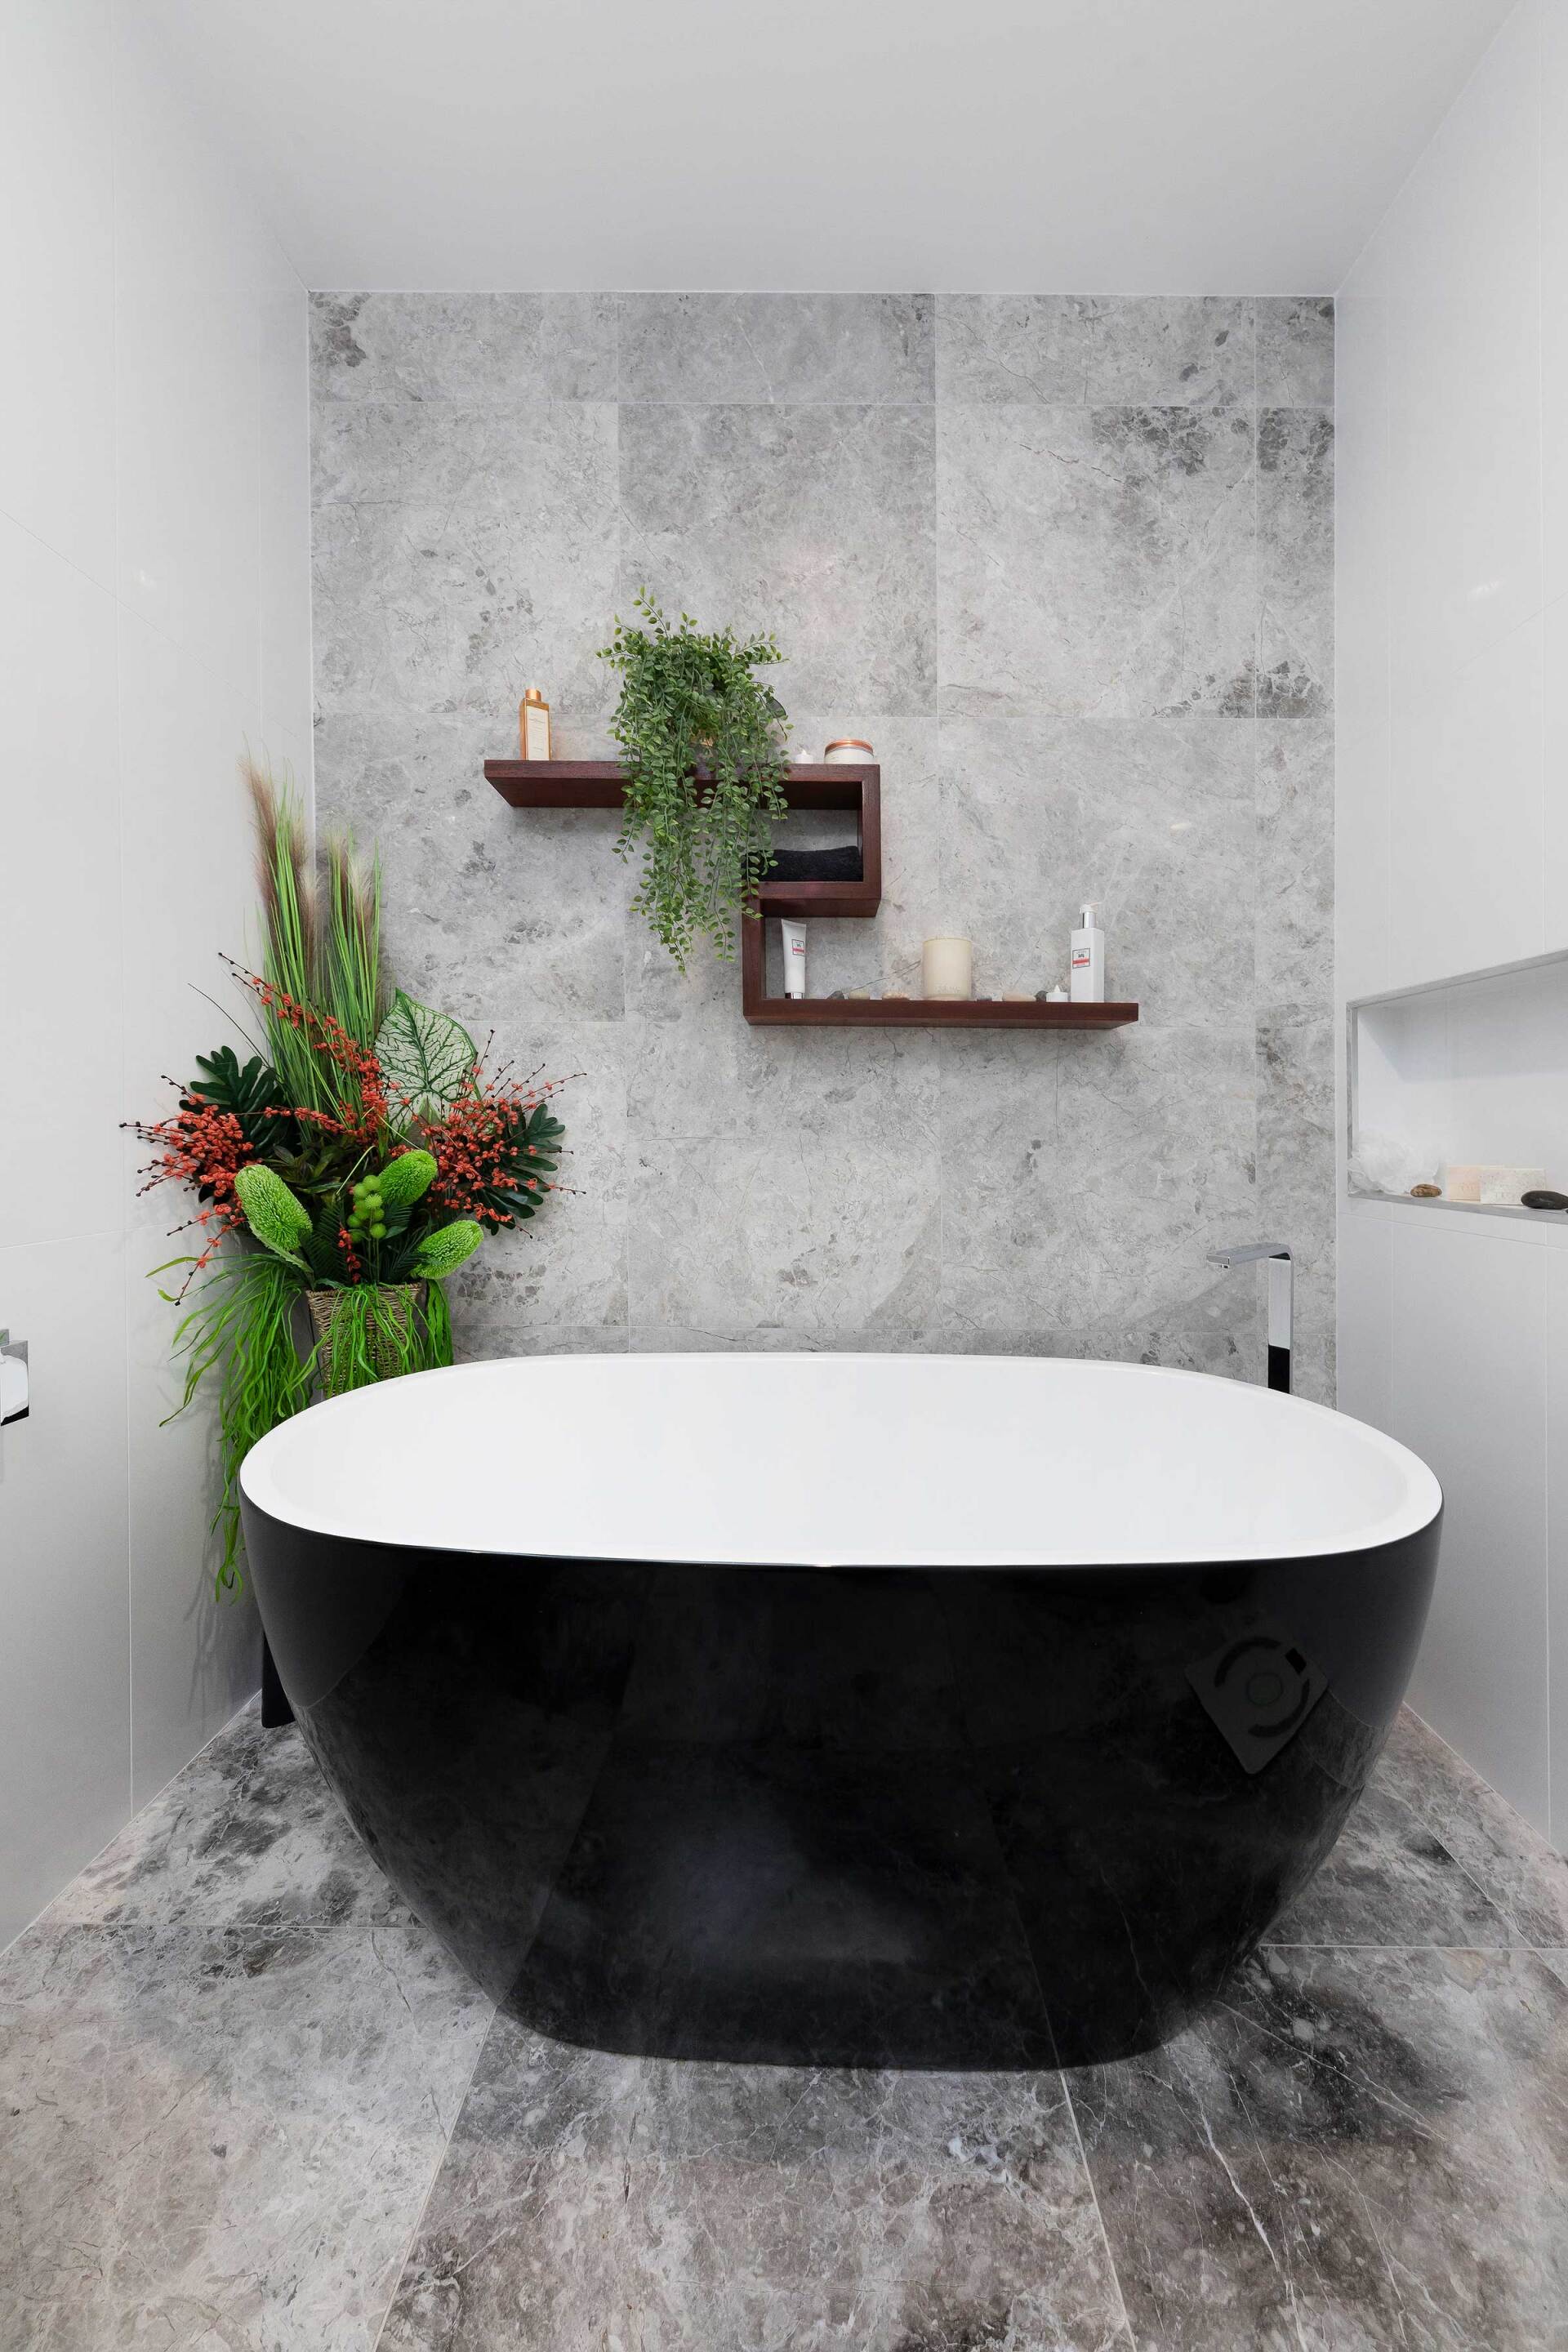 Bath tub - Bathroom Renovations in Forster-Tuncurry, NSW